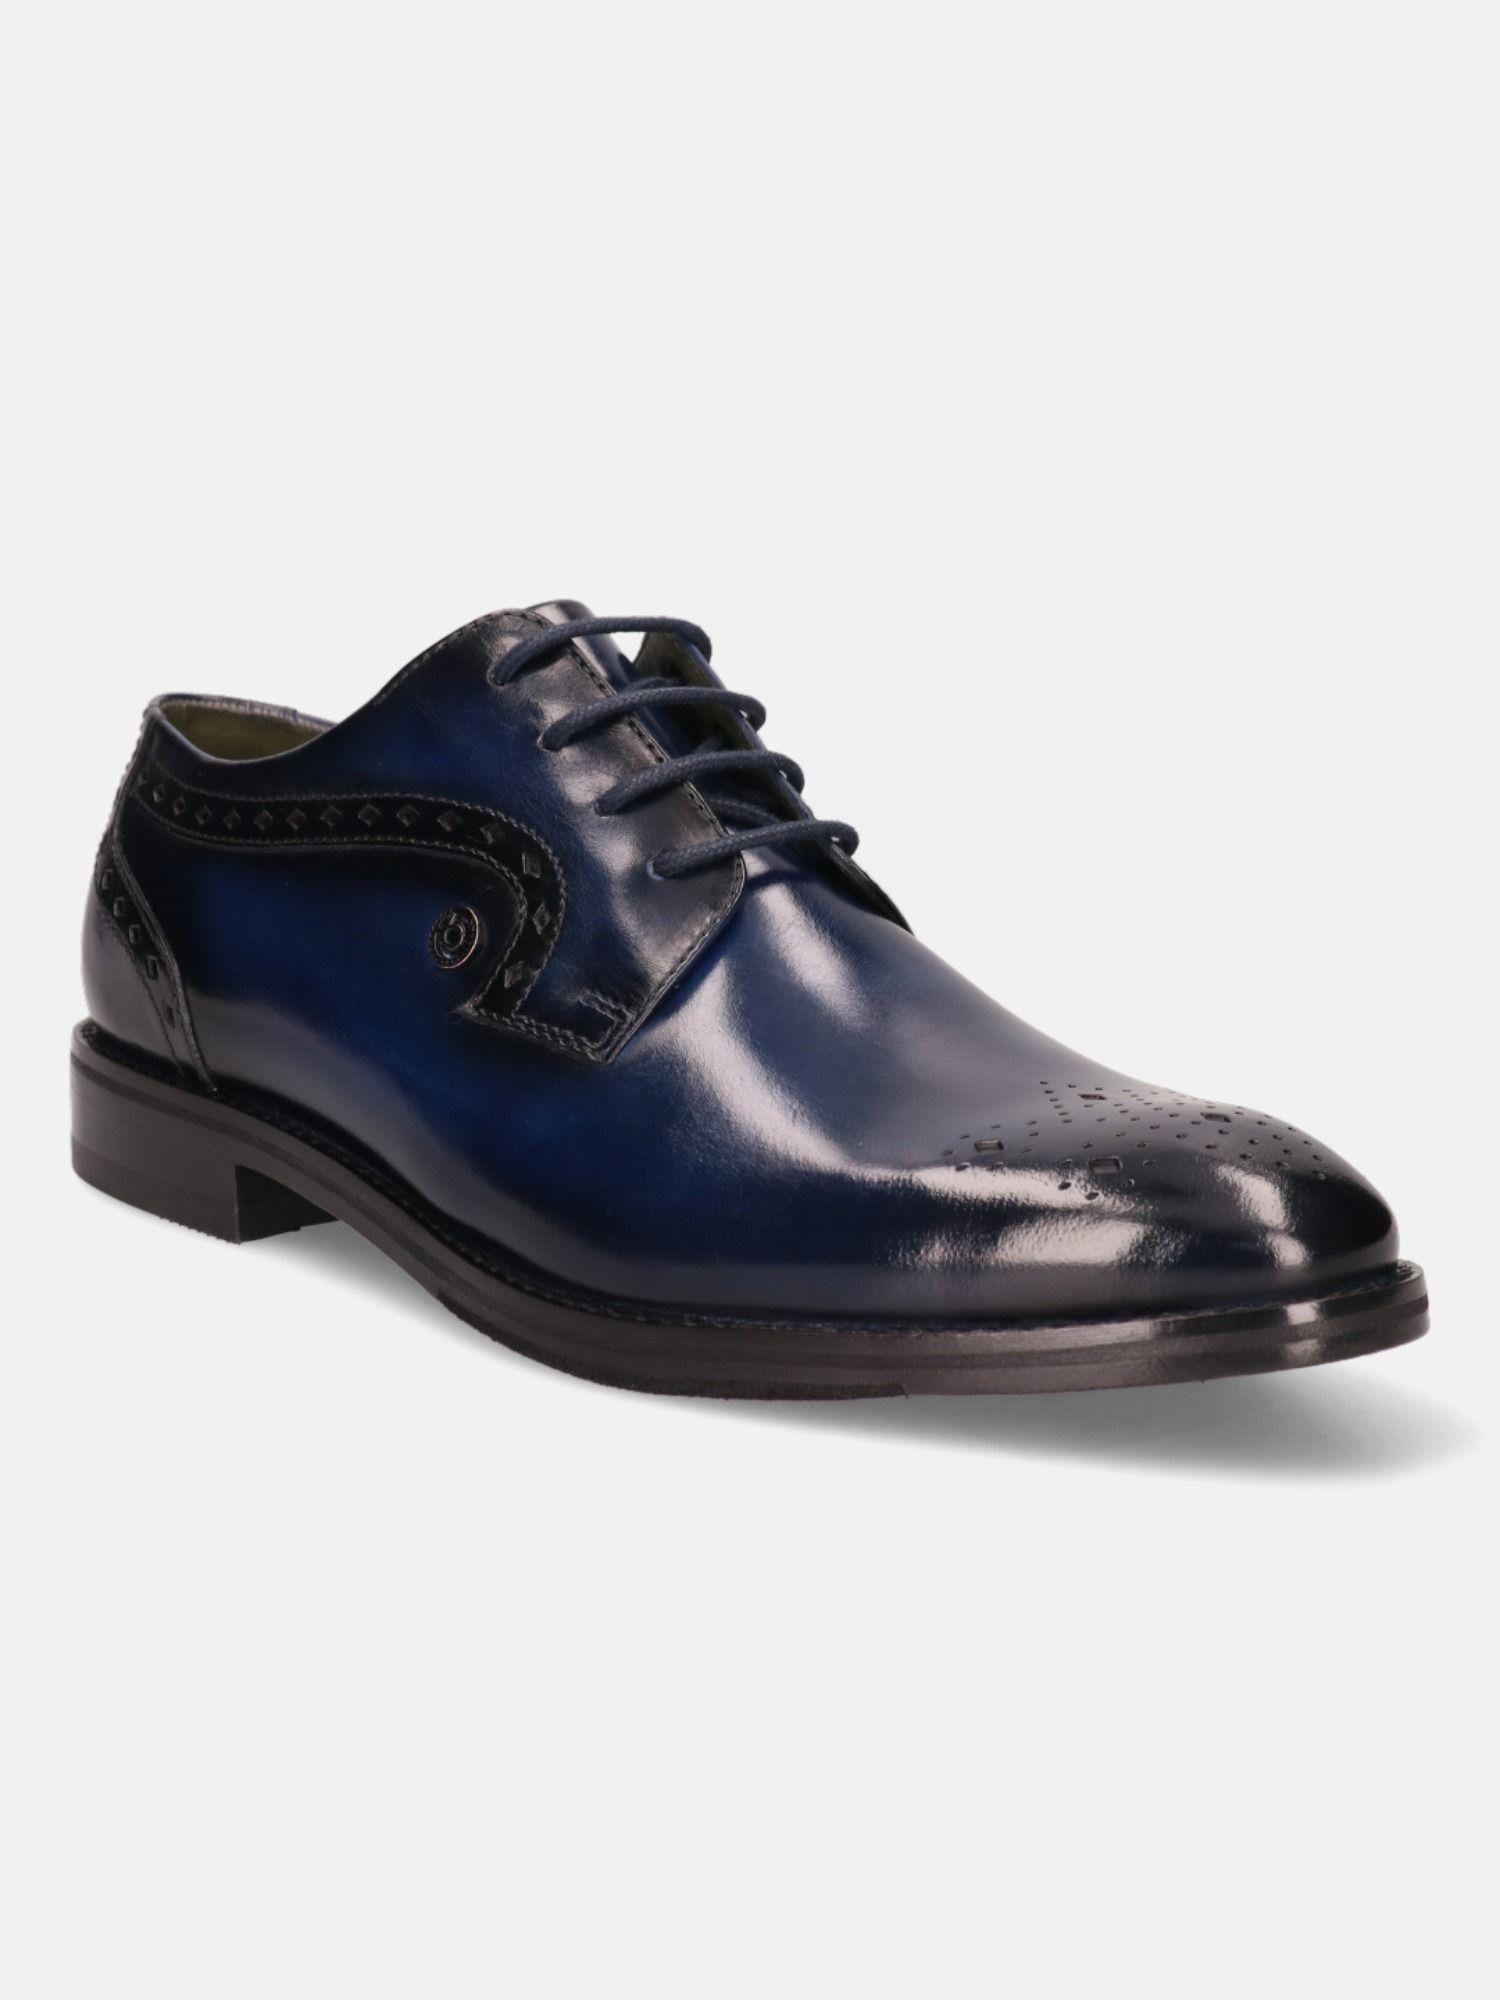 mamadou blue men leather derbies formal shoes